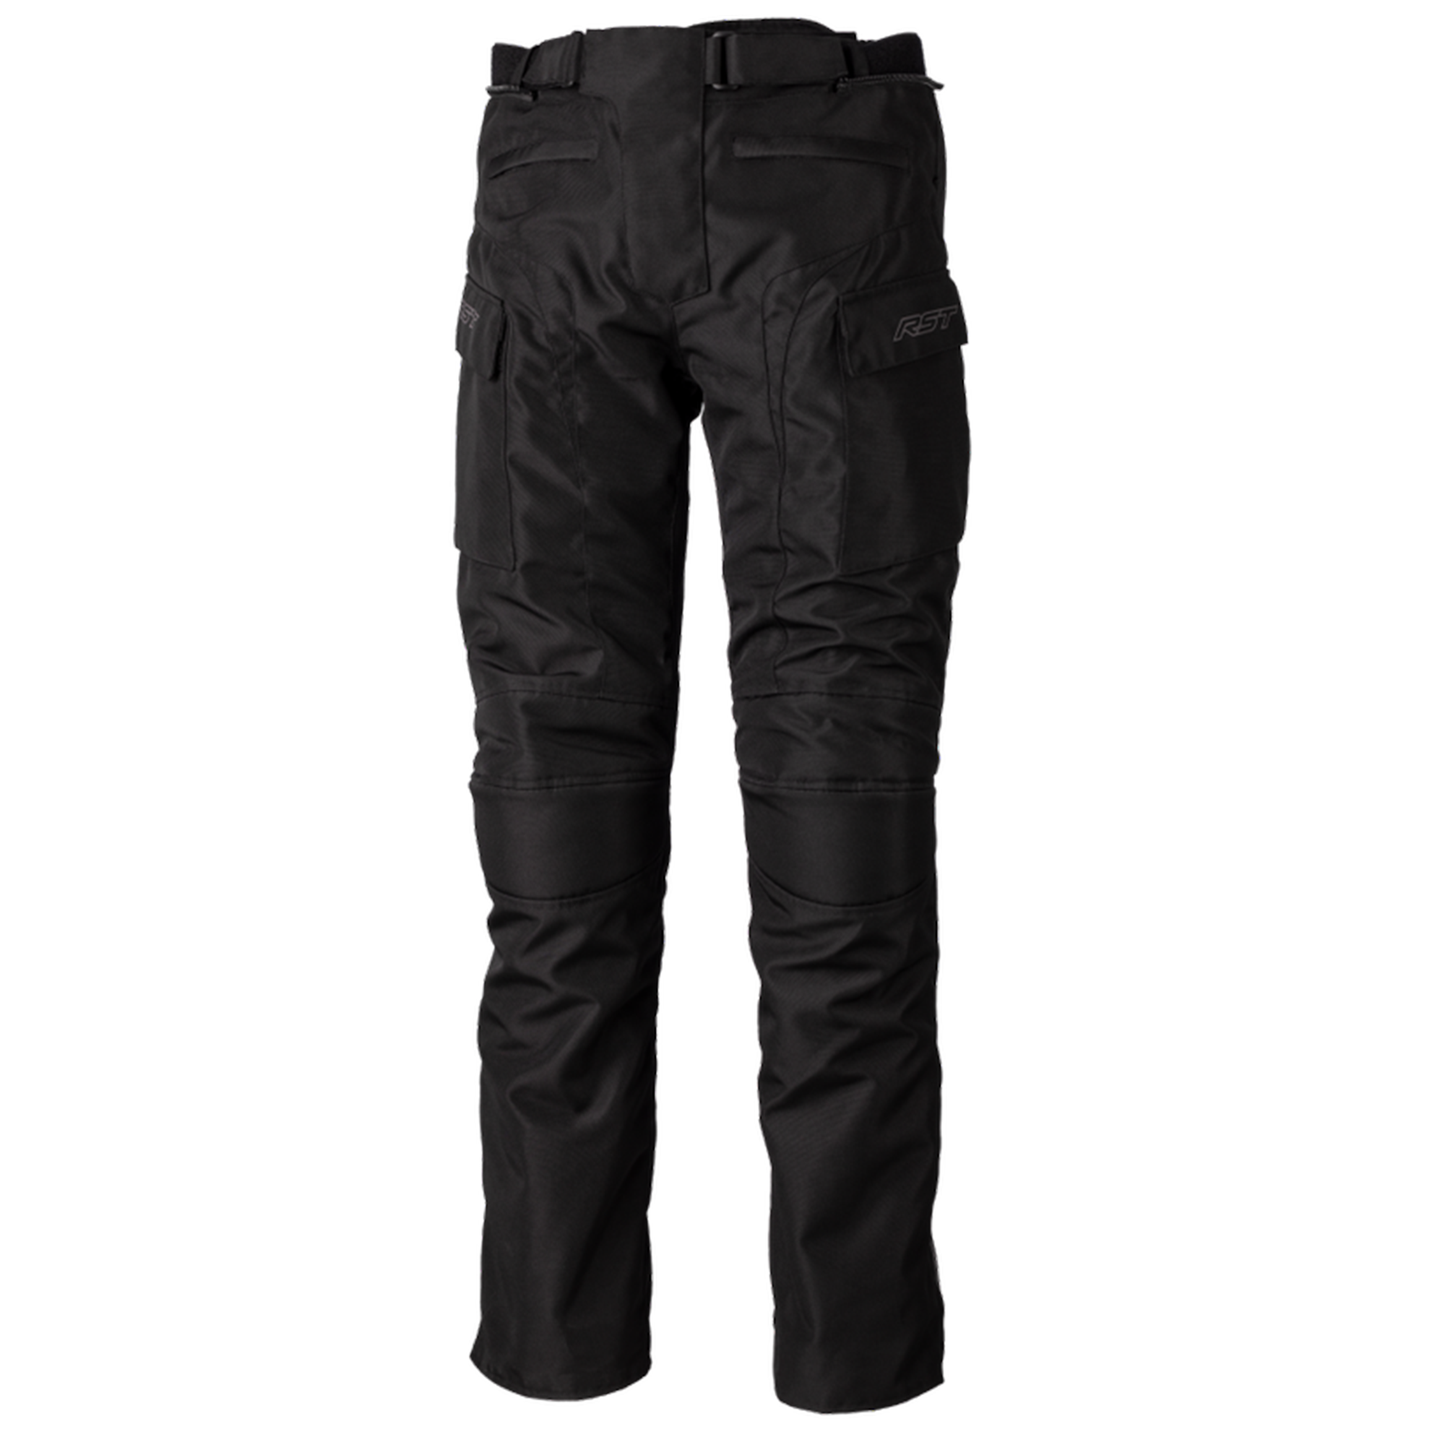 RST Alpha 5 Men's Textile Riding Jean - Regular Length - Black (3030)